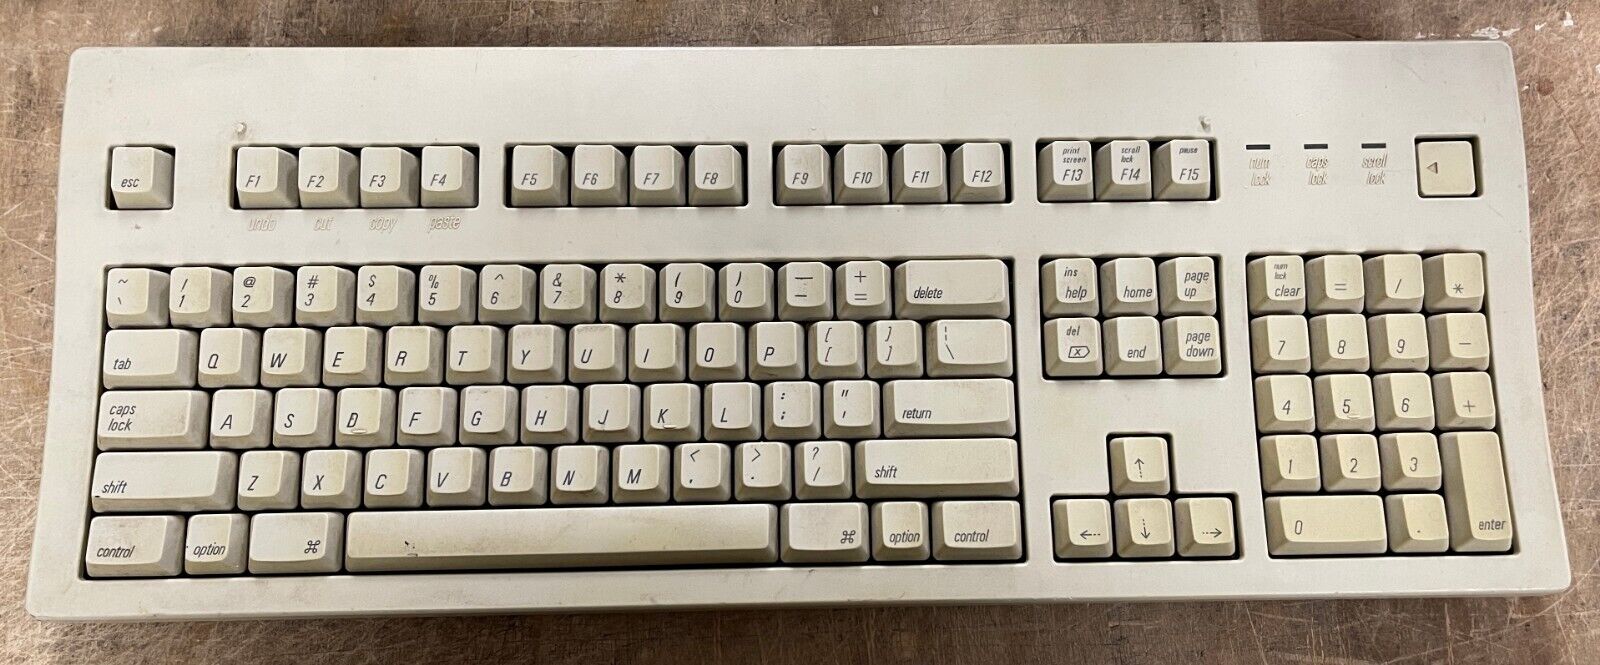 Vintage Macally MK 105X Apple ADB Keyboard TESTED